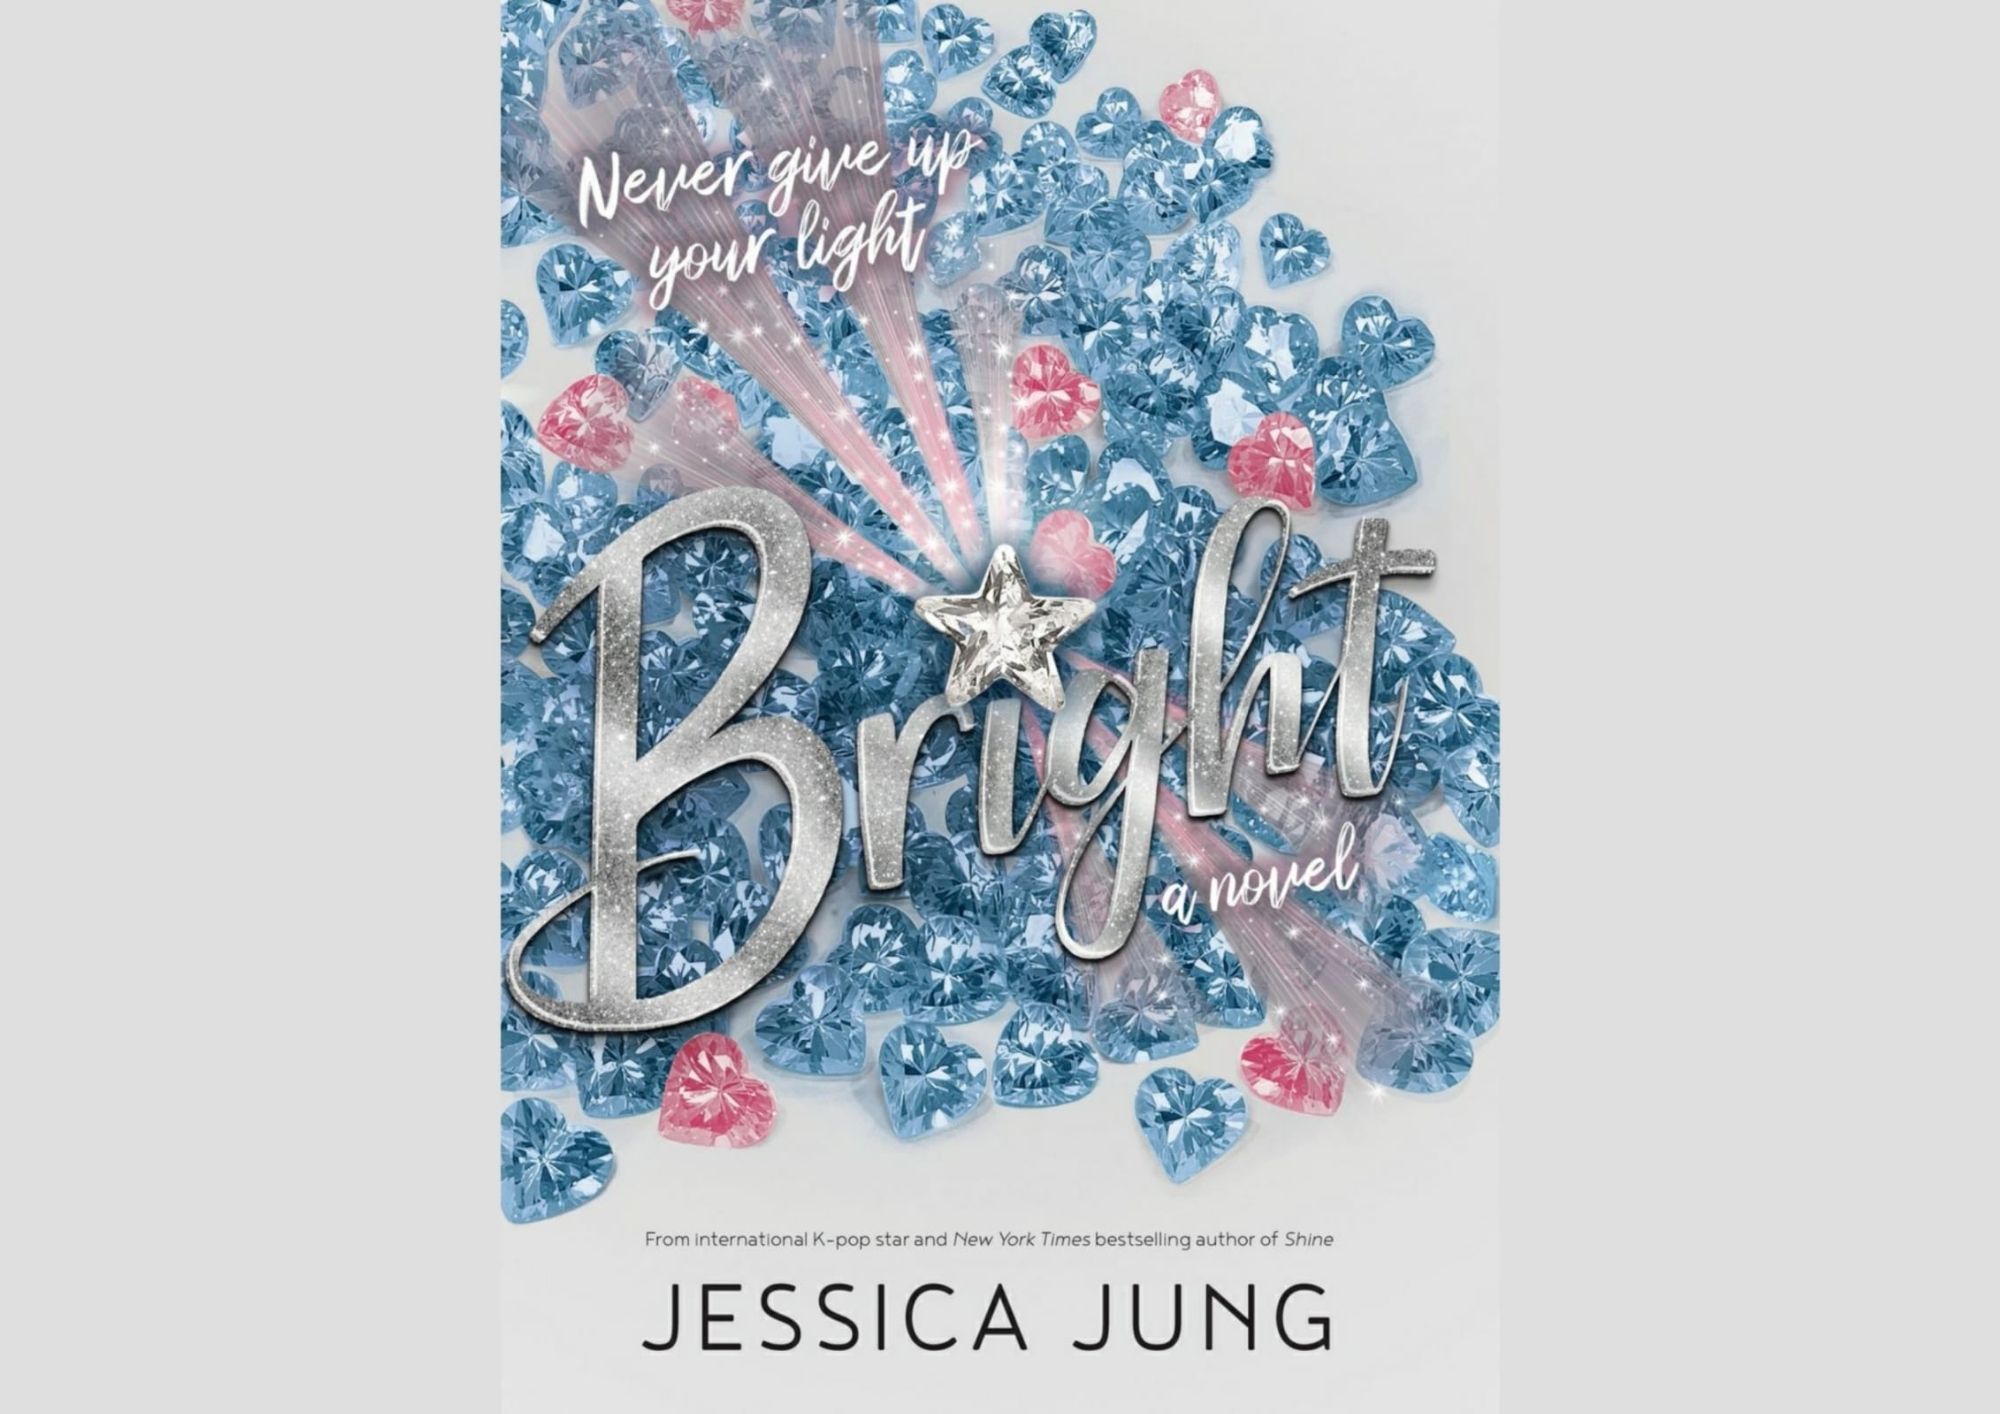 JESSICA JUNG - BRIGHT [NOVEL] (HARDCOVER)